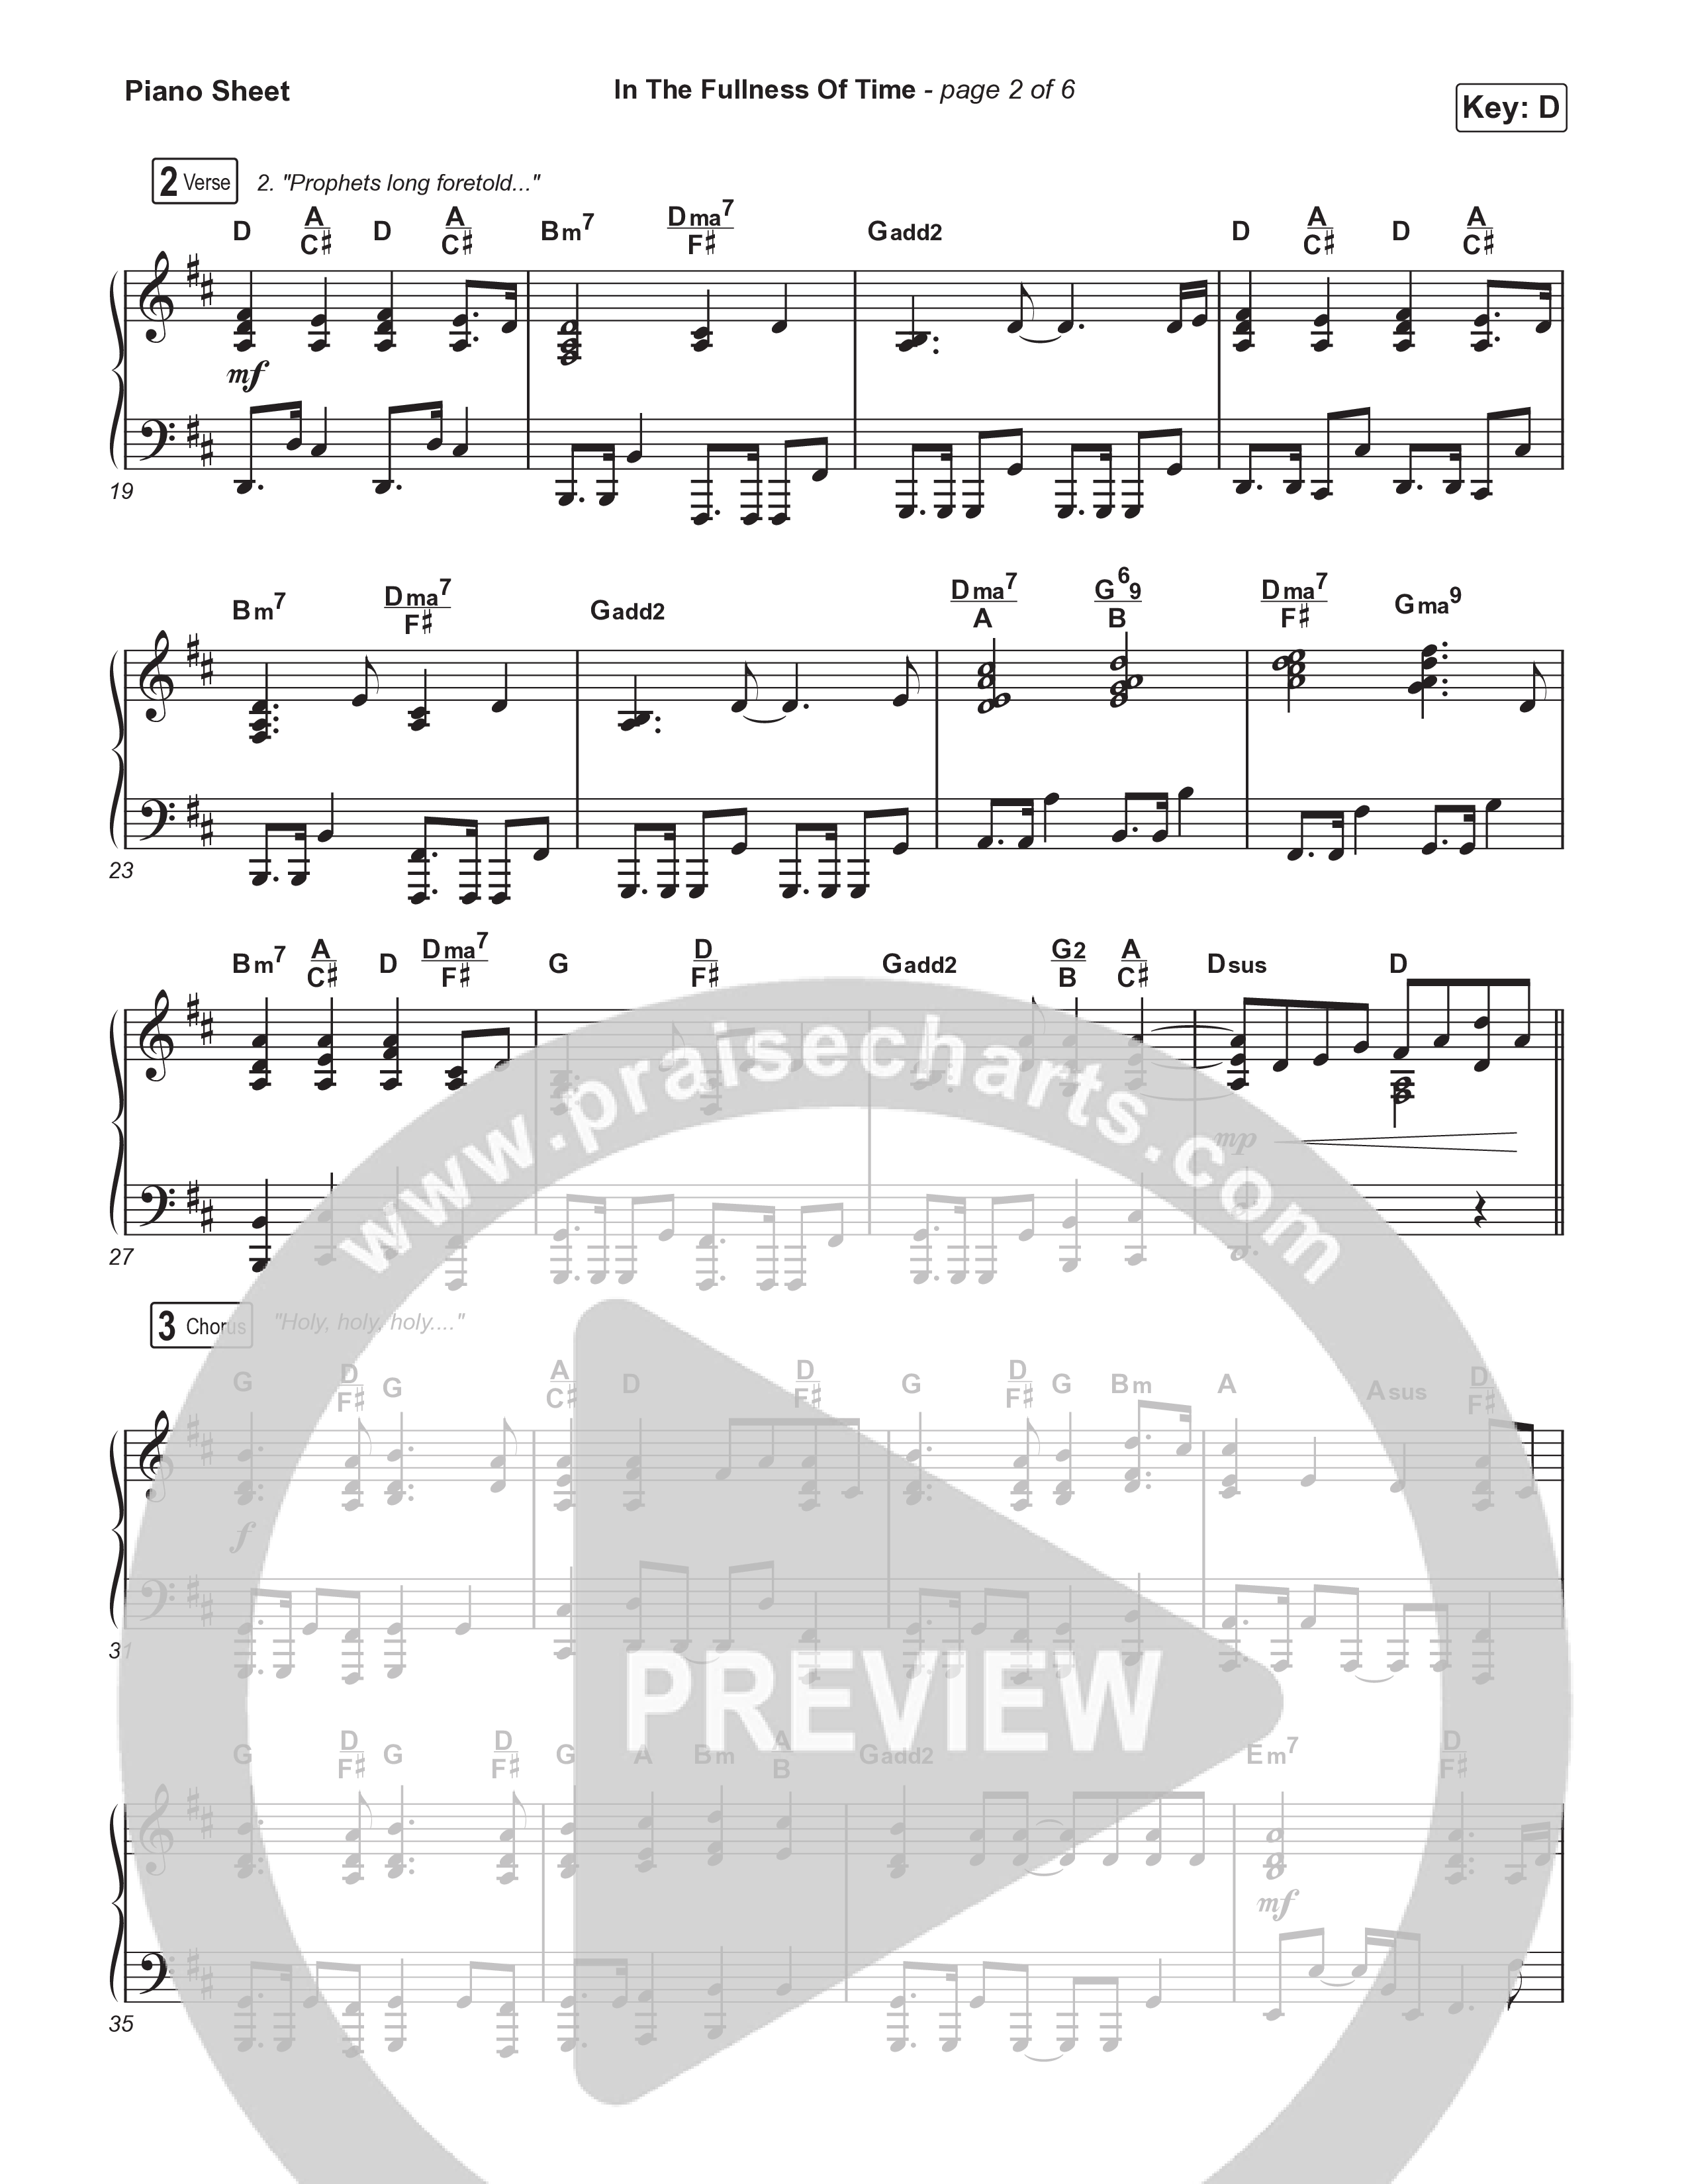 In The Fullness Of Time (Choral Anthem SATB) Piano Sheet (Matt Papa / Matt Boswell / Arr. Luke Gambill)